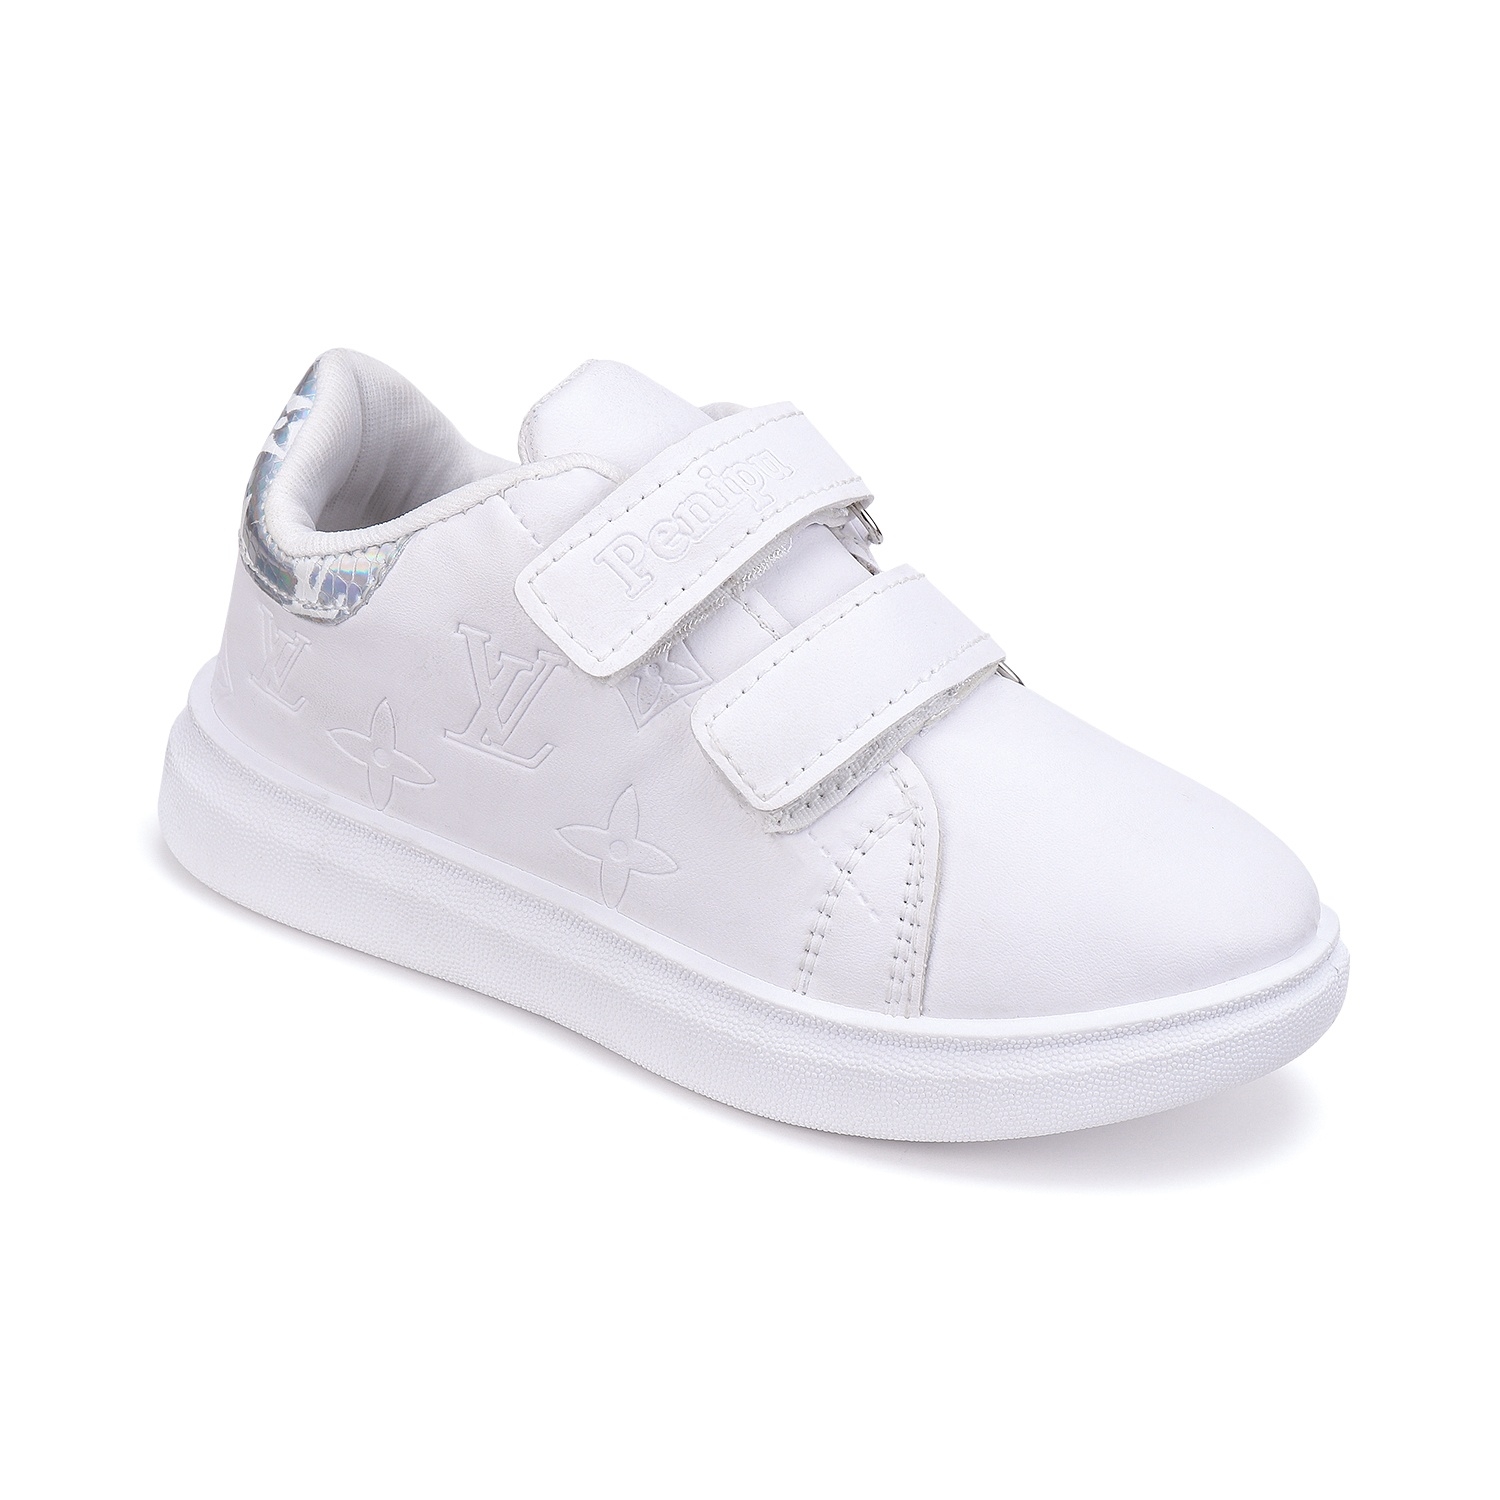 Camro Zara 2 White/Silver Boys Sneakers